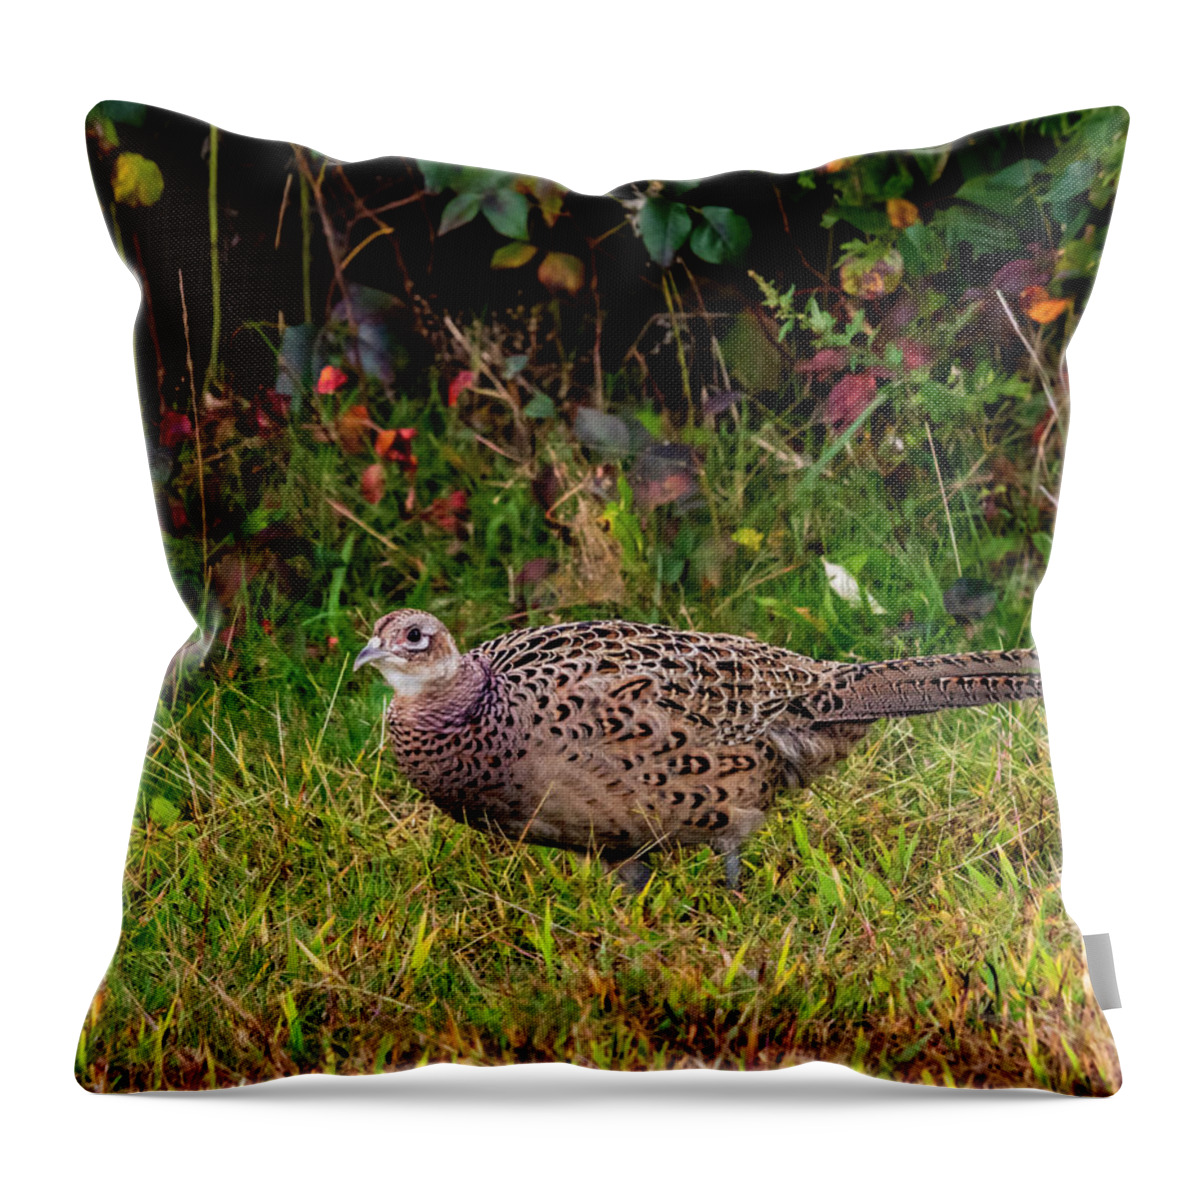 Pheasant Throw Pillow featuring the photograph Pheasant Hen by Cathy Kovarik